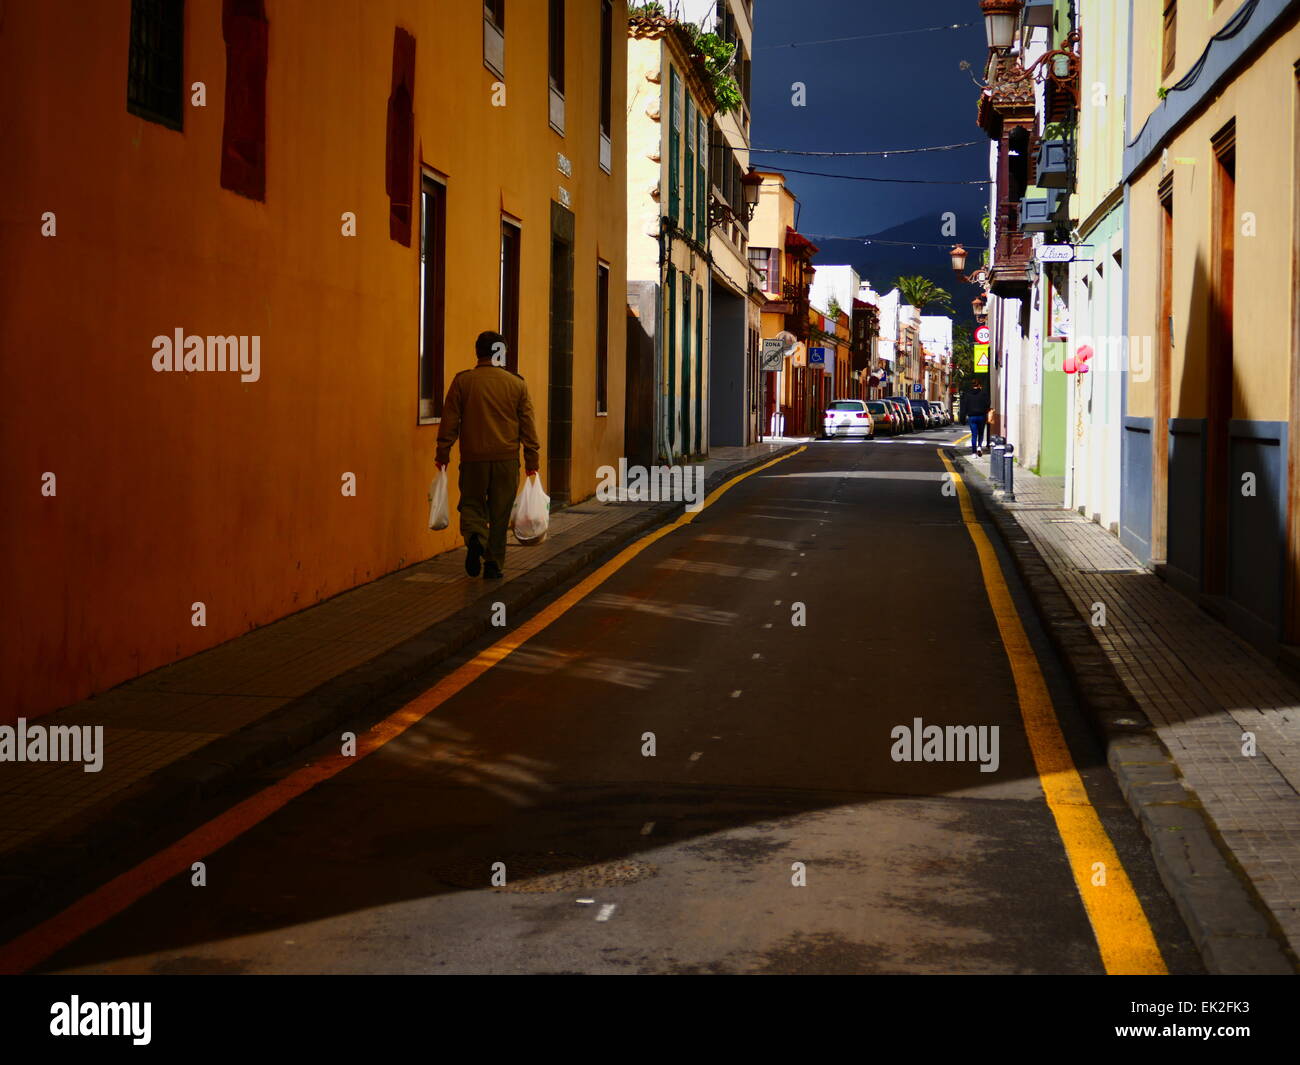 Street scene of old town La Laguna Tenerife island Canary islands Spain Stock Photo